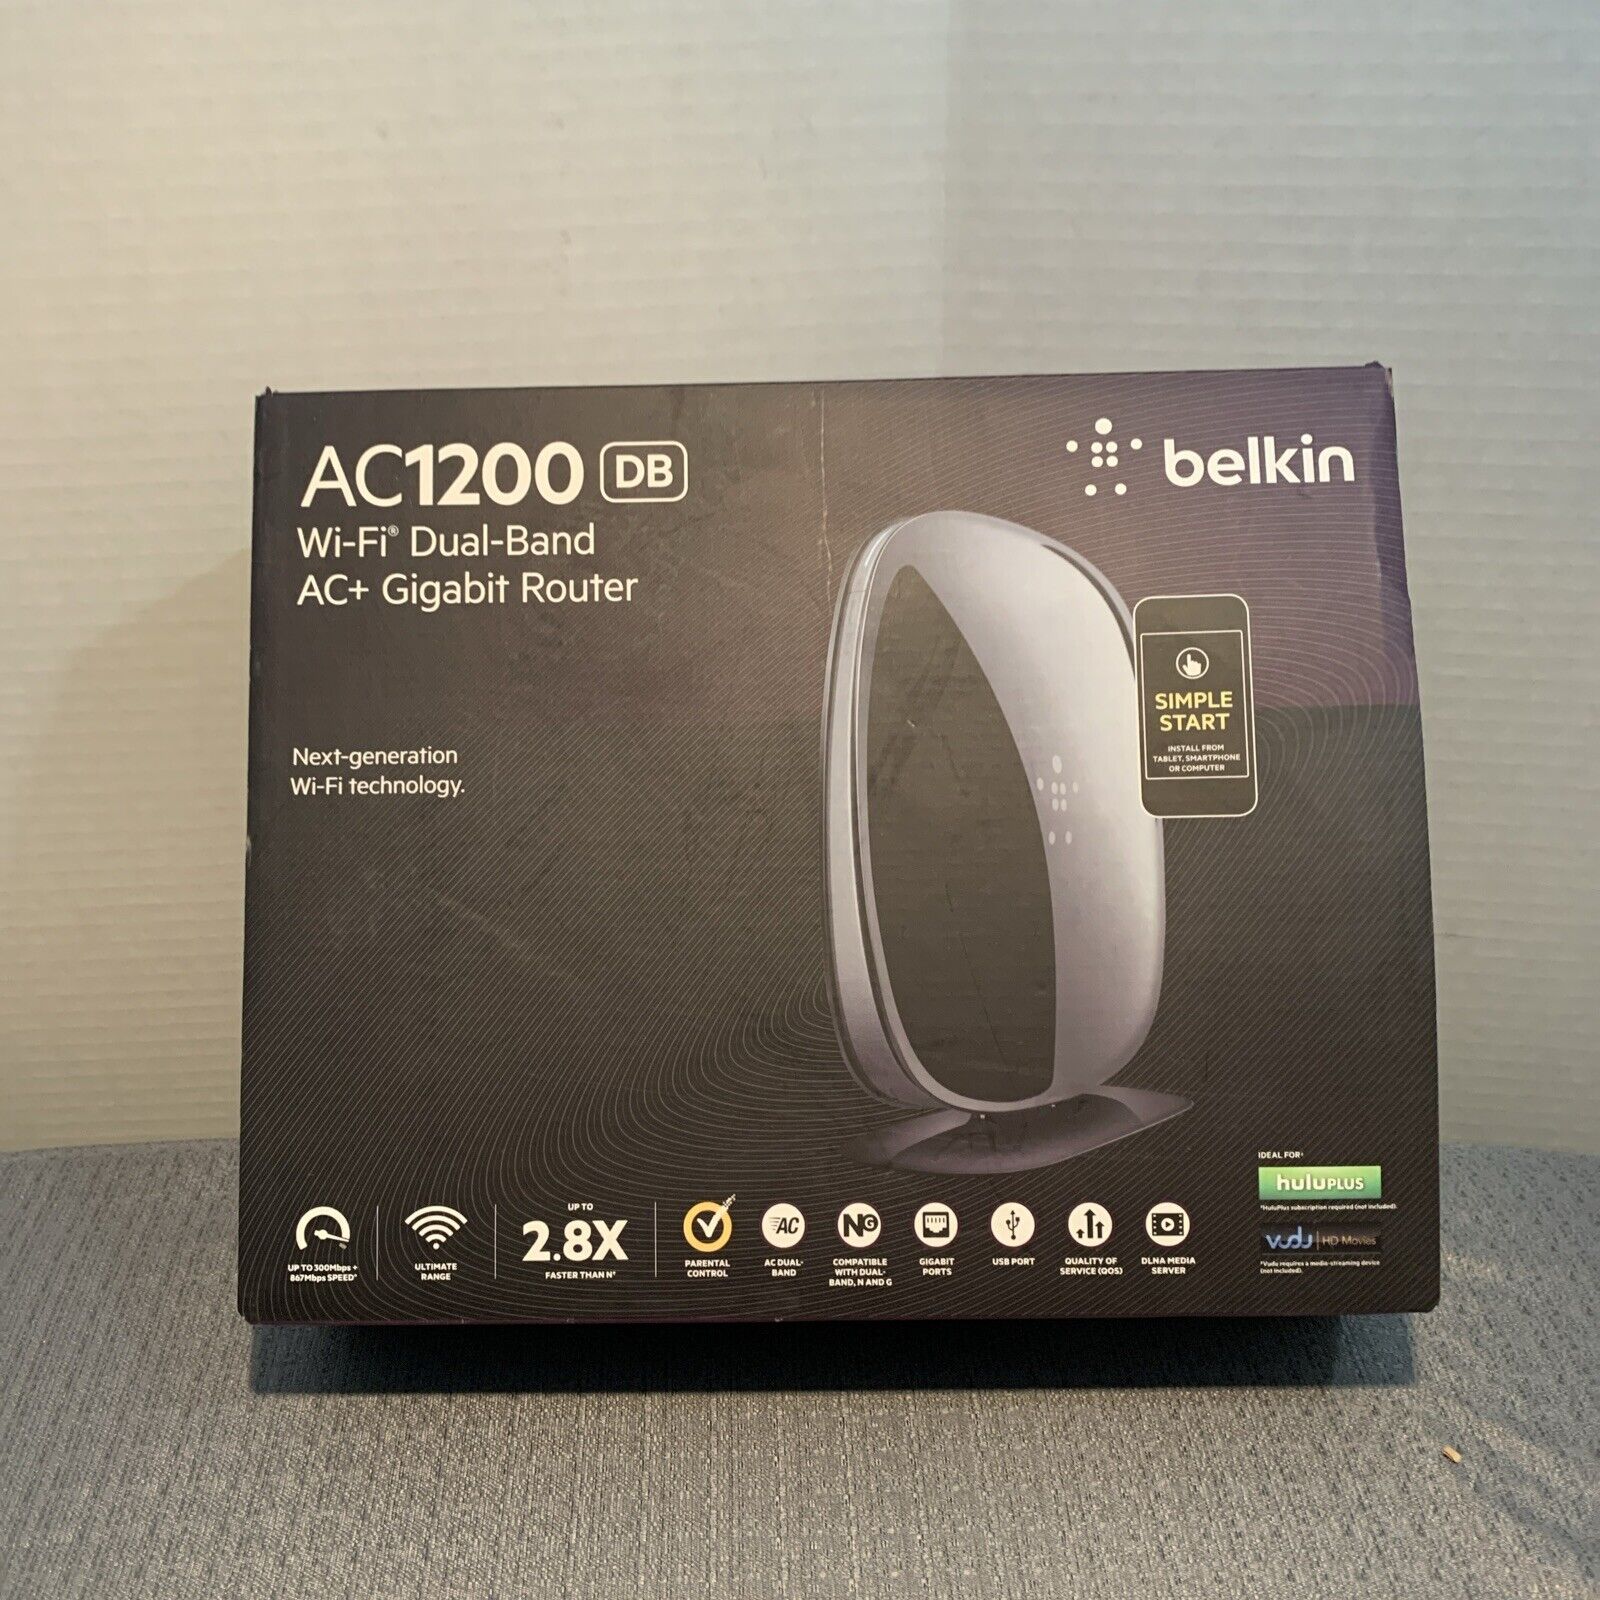 Brand New Sealed - Belkin AC 1200 DB Wi-Fi Dual-Band AC+ Gigabit Router